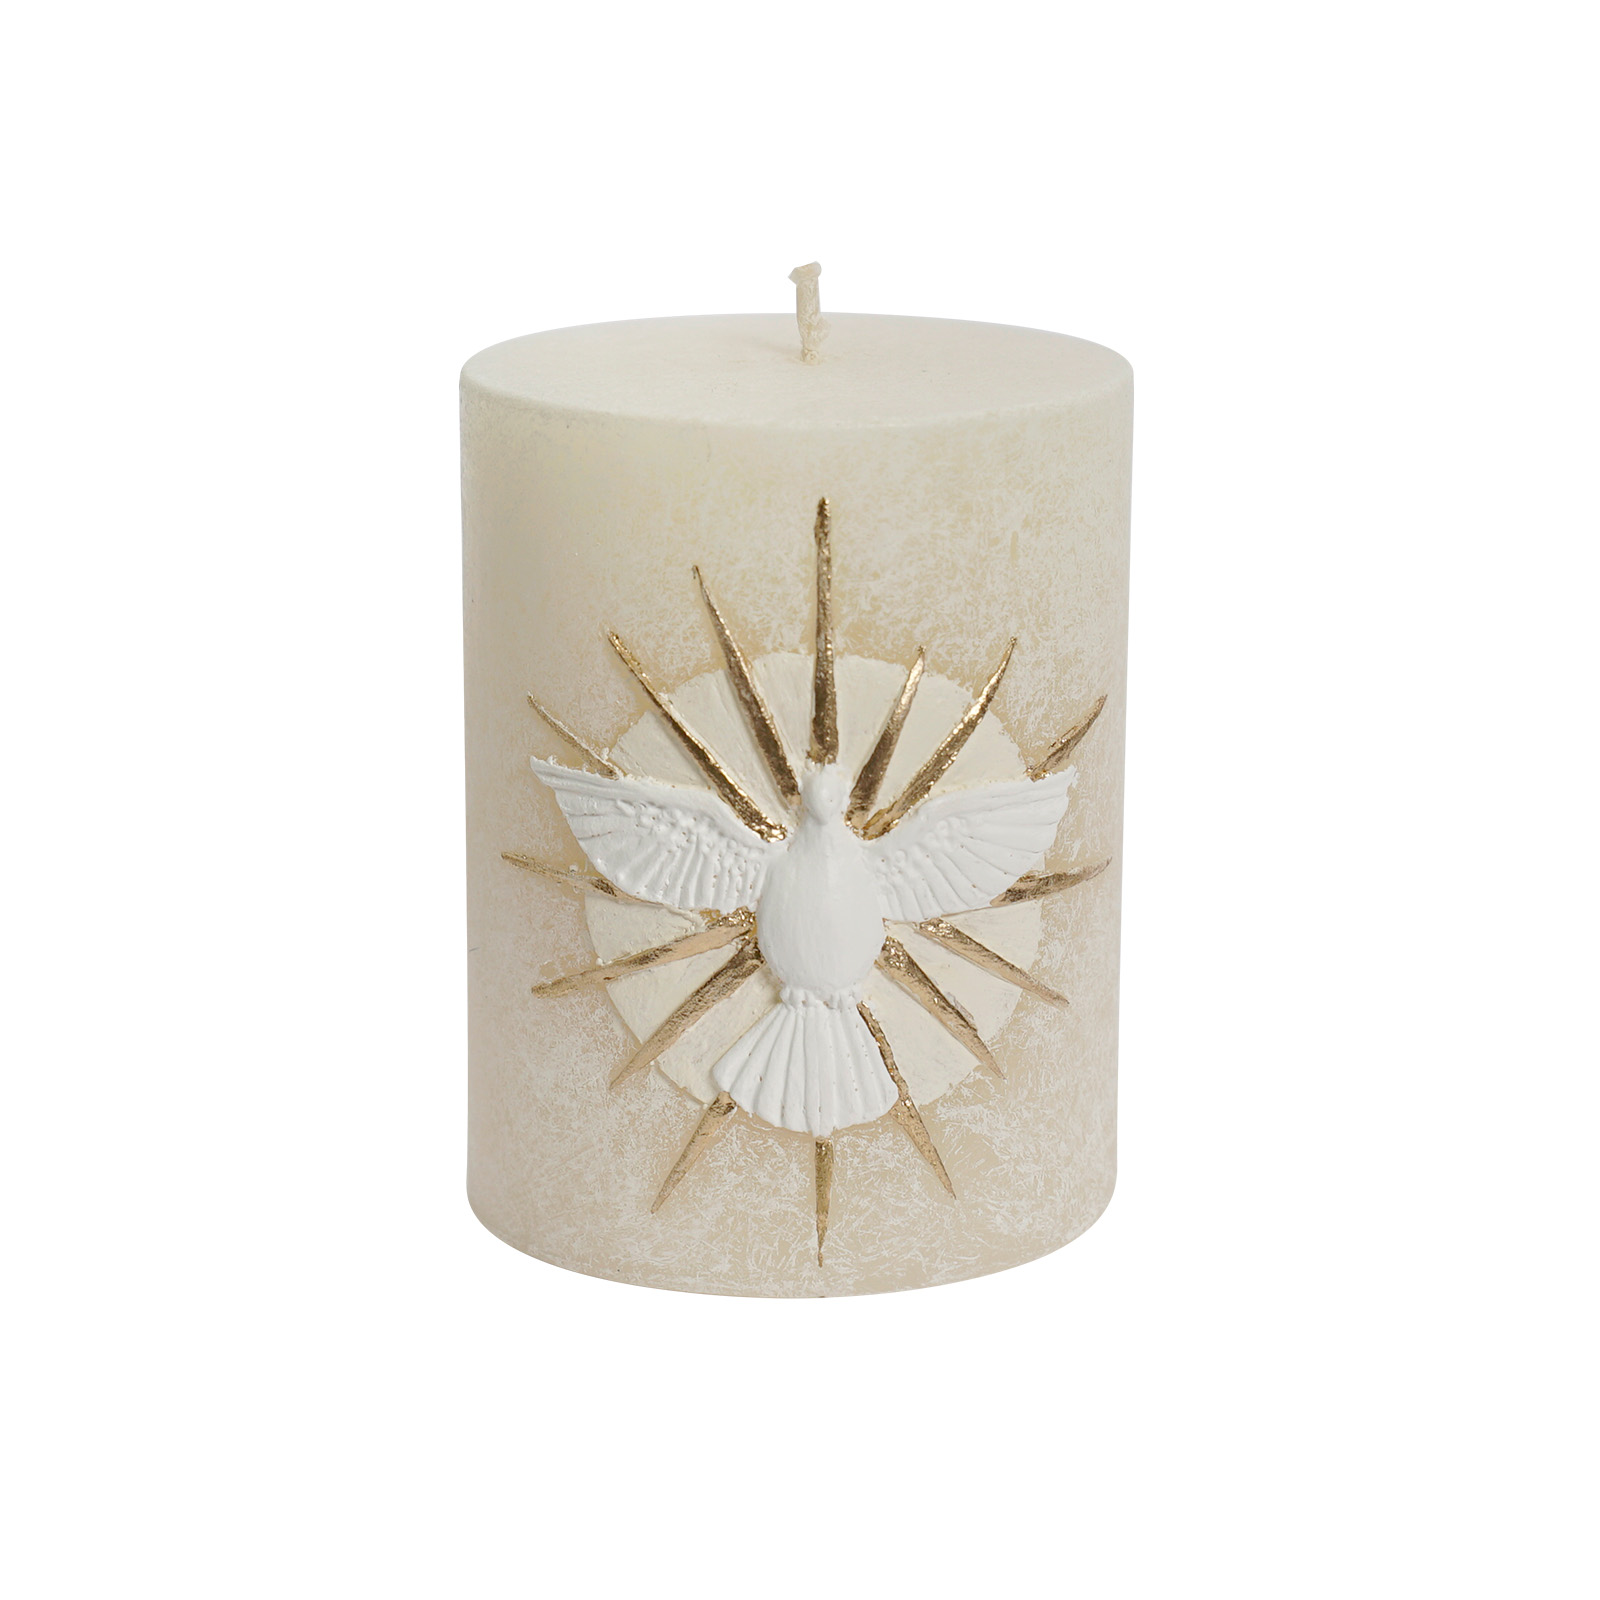 11784 - Vela Temática Decorativa 'Espíritu Santo' -Aroma a